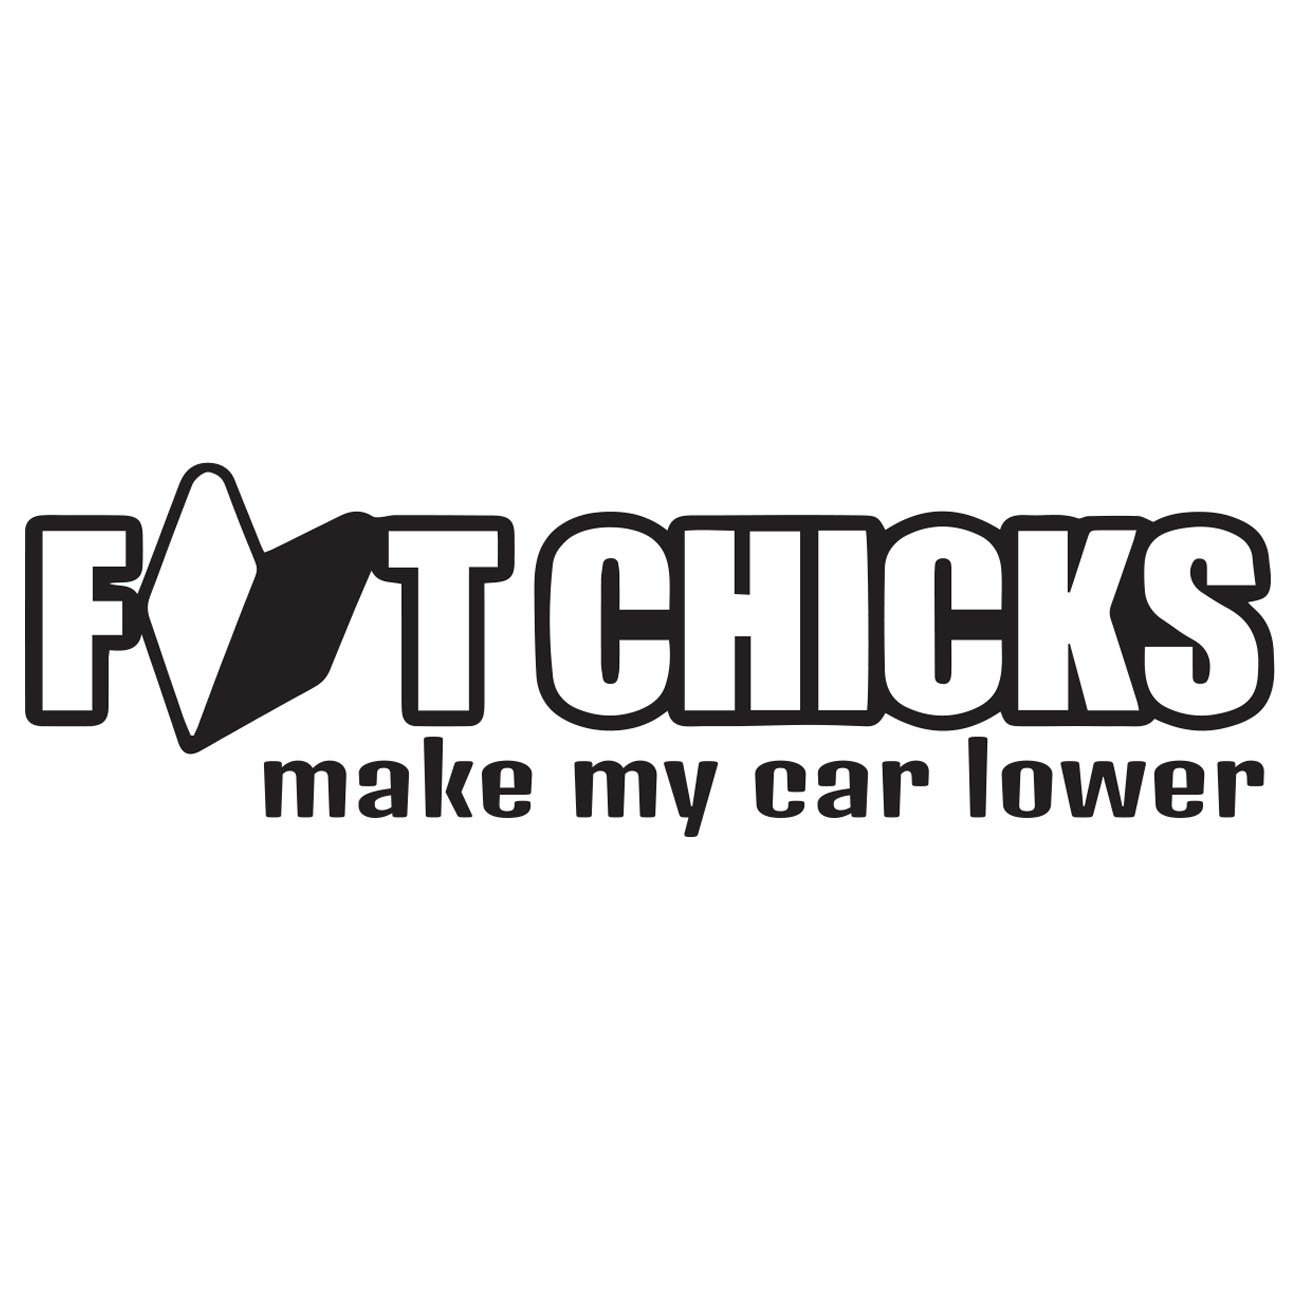 Fat chicks make my car lower - JDM